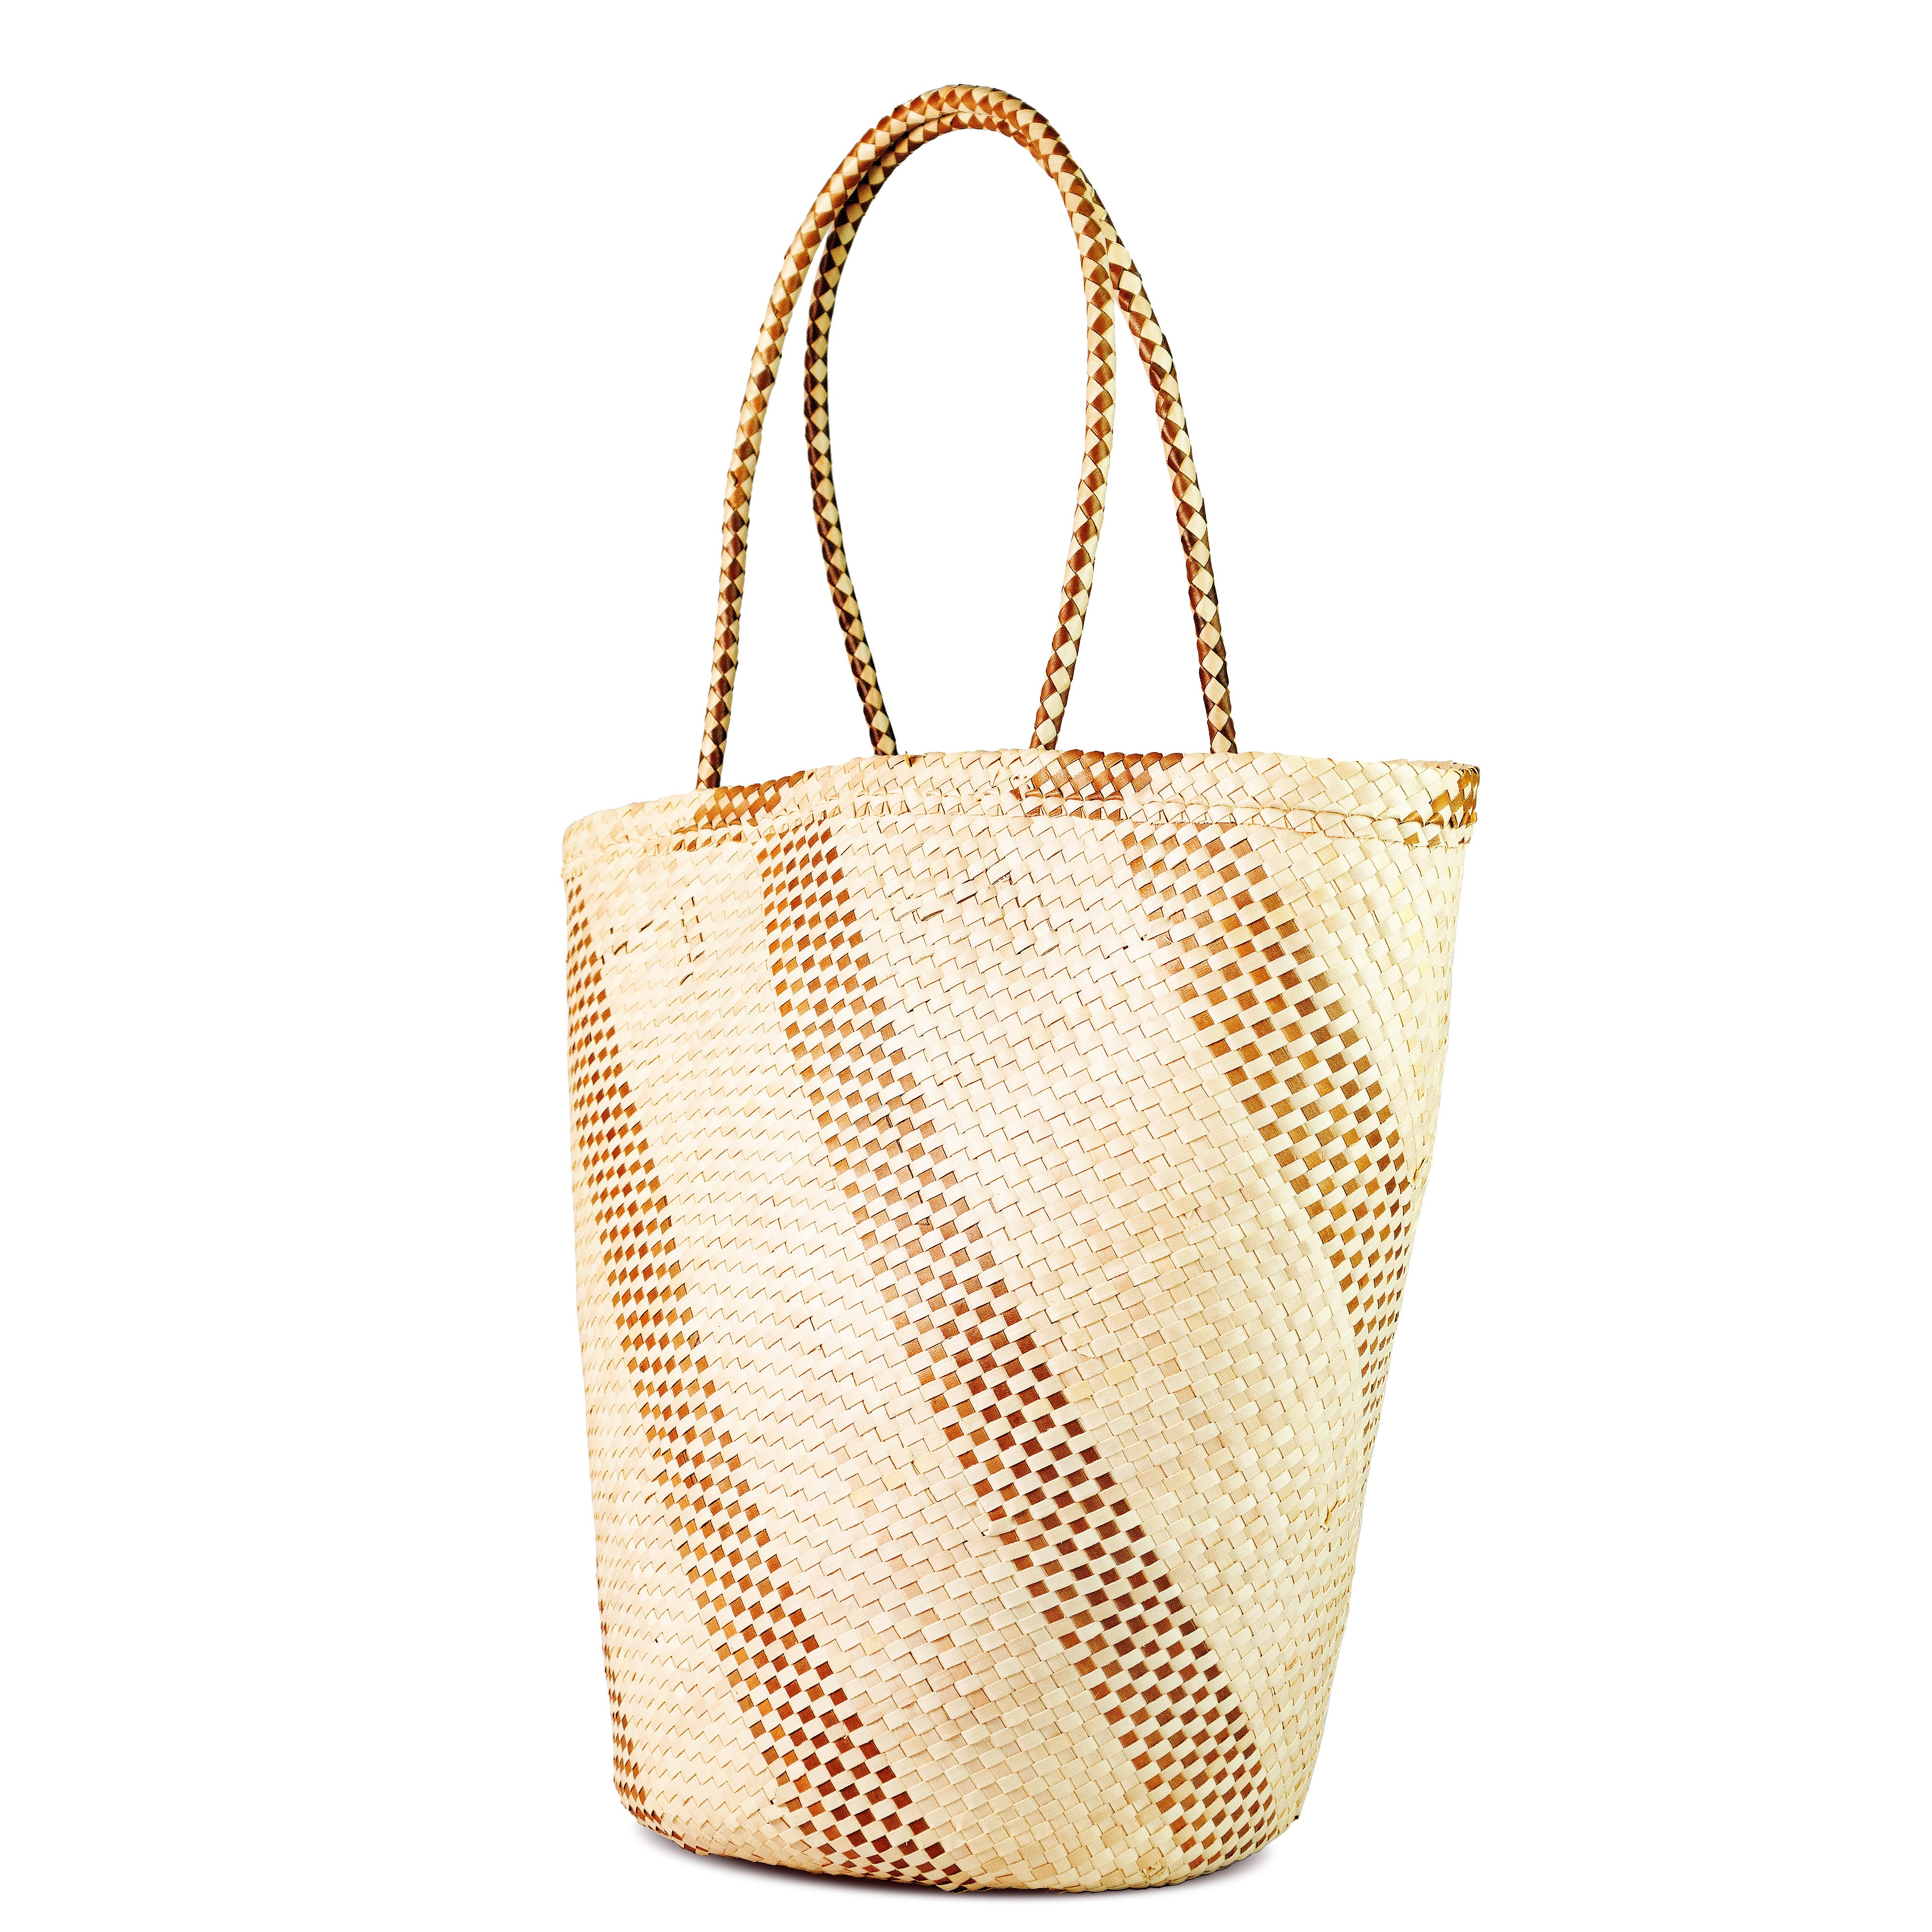 Side view tan and natural tote shopper basket bag